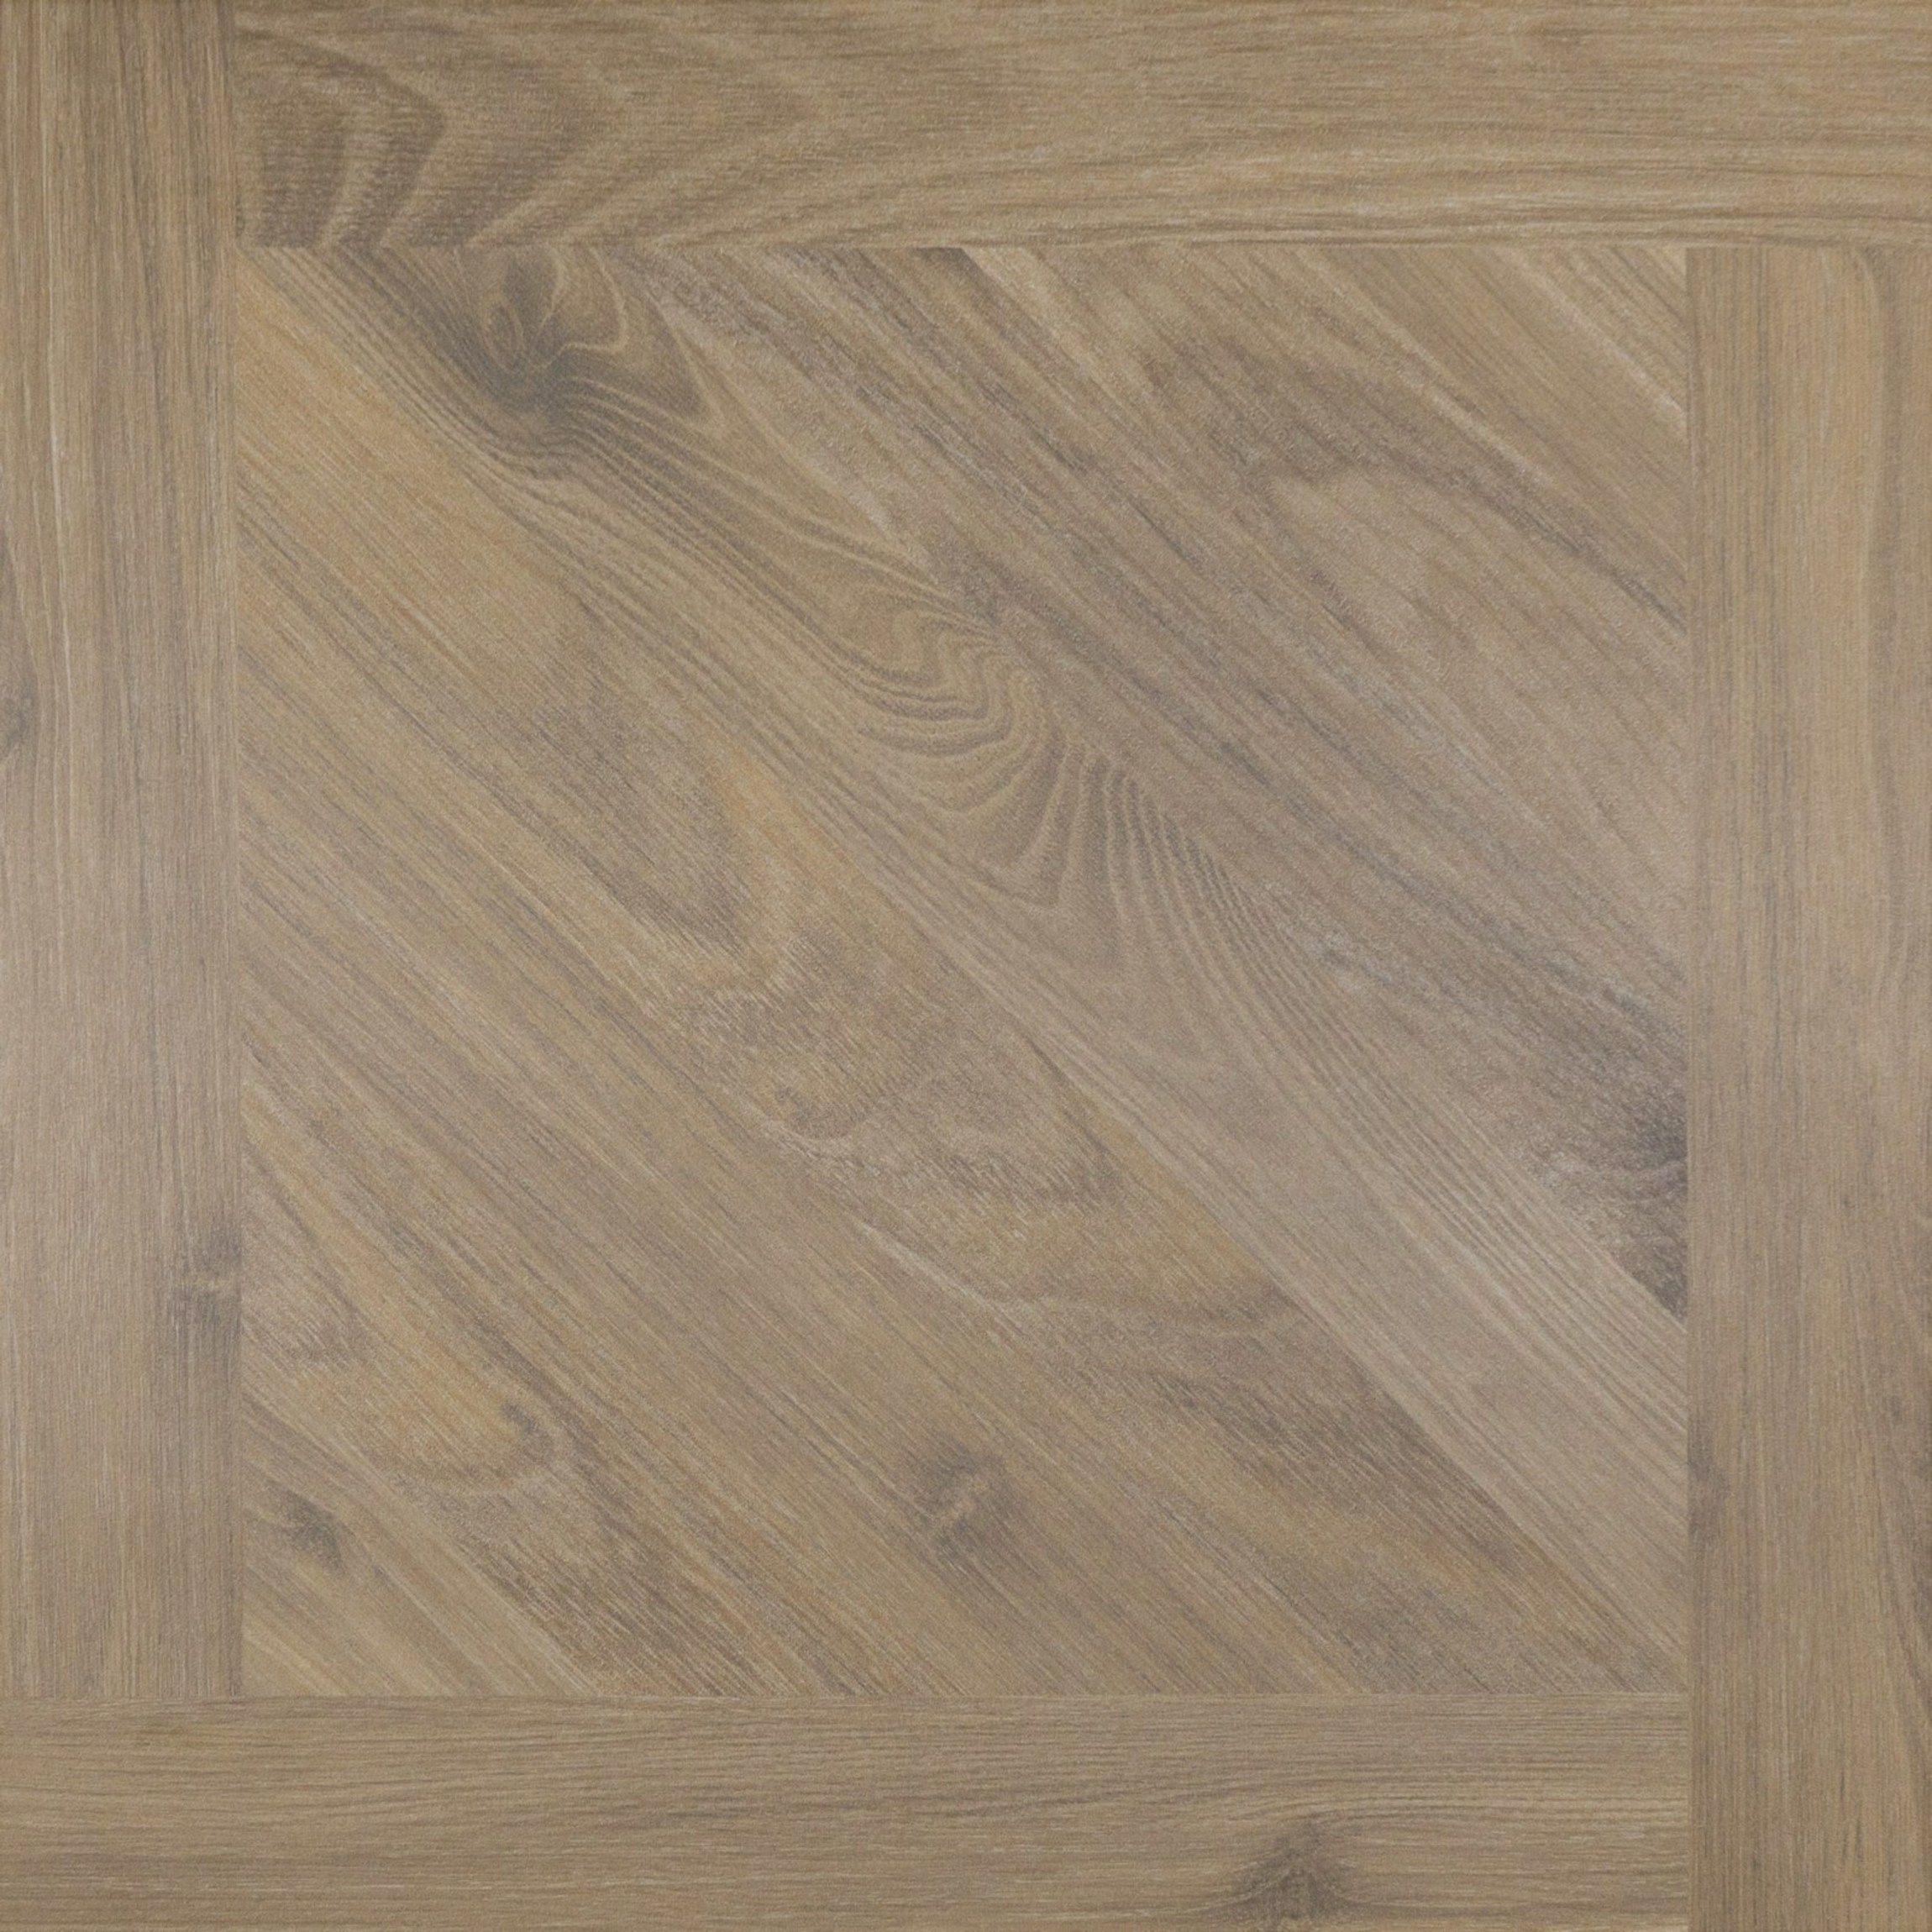 Kanna Nogal Wood Effect Floor Tiles, Tiling On Plywood Floor Uk